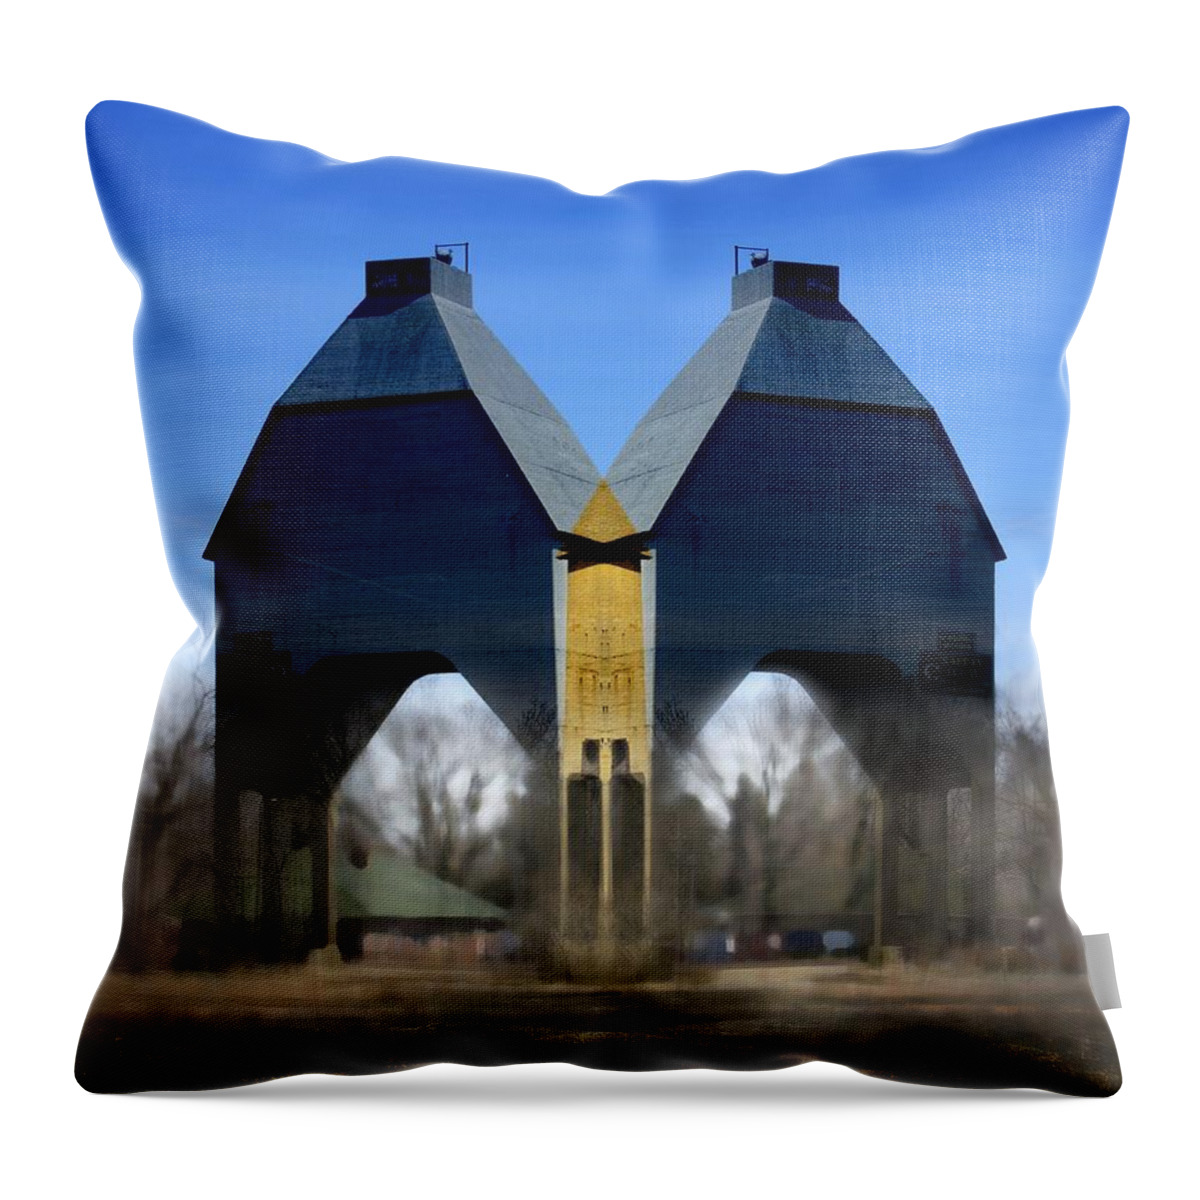 Buildings Throw Pillow featuring the photograph Coal Loader New Buffalo by John Hansen